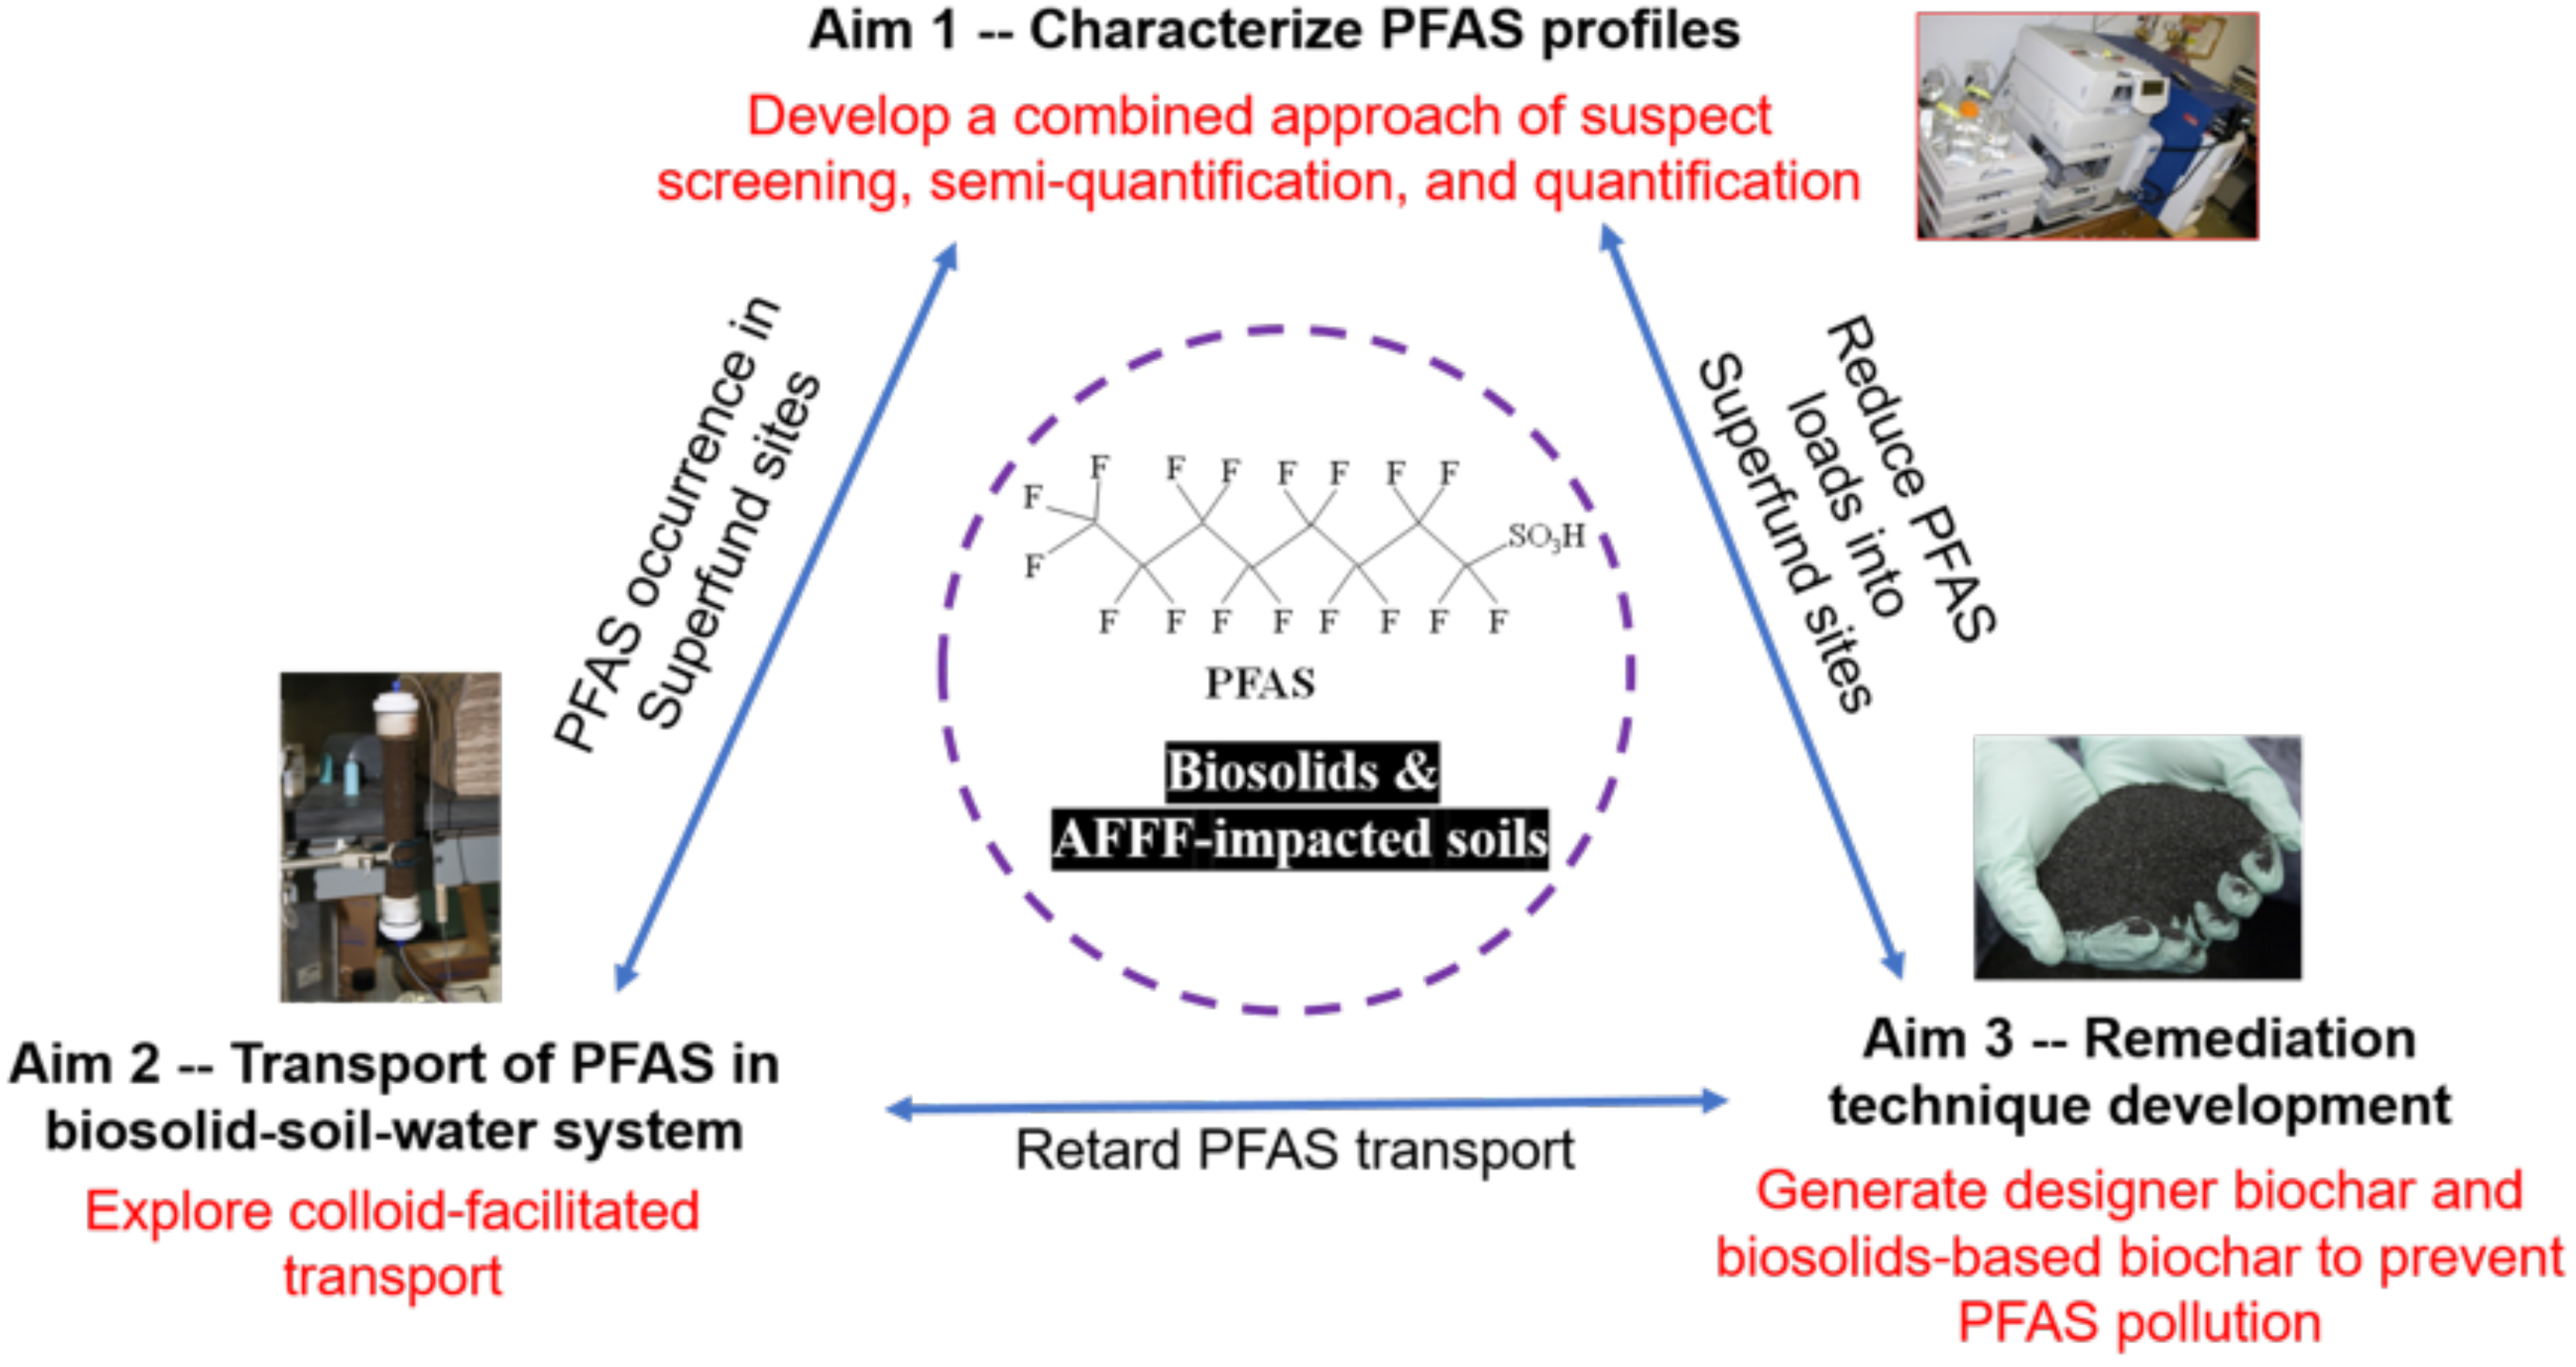 Aim 1 - Characterize PFAS Profiles